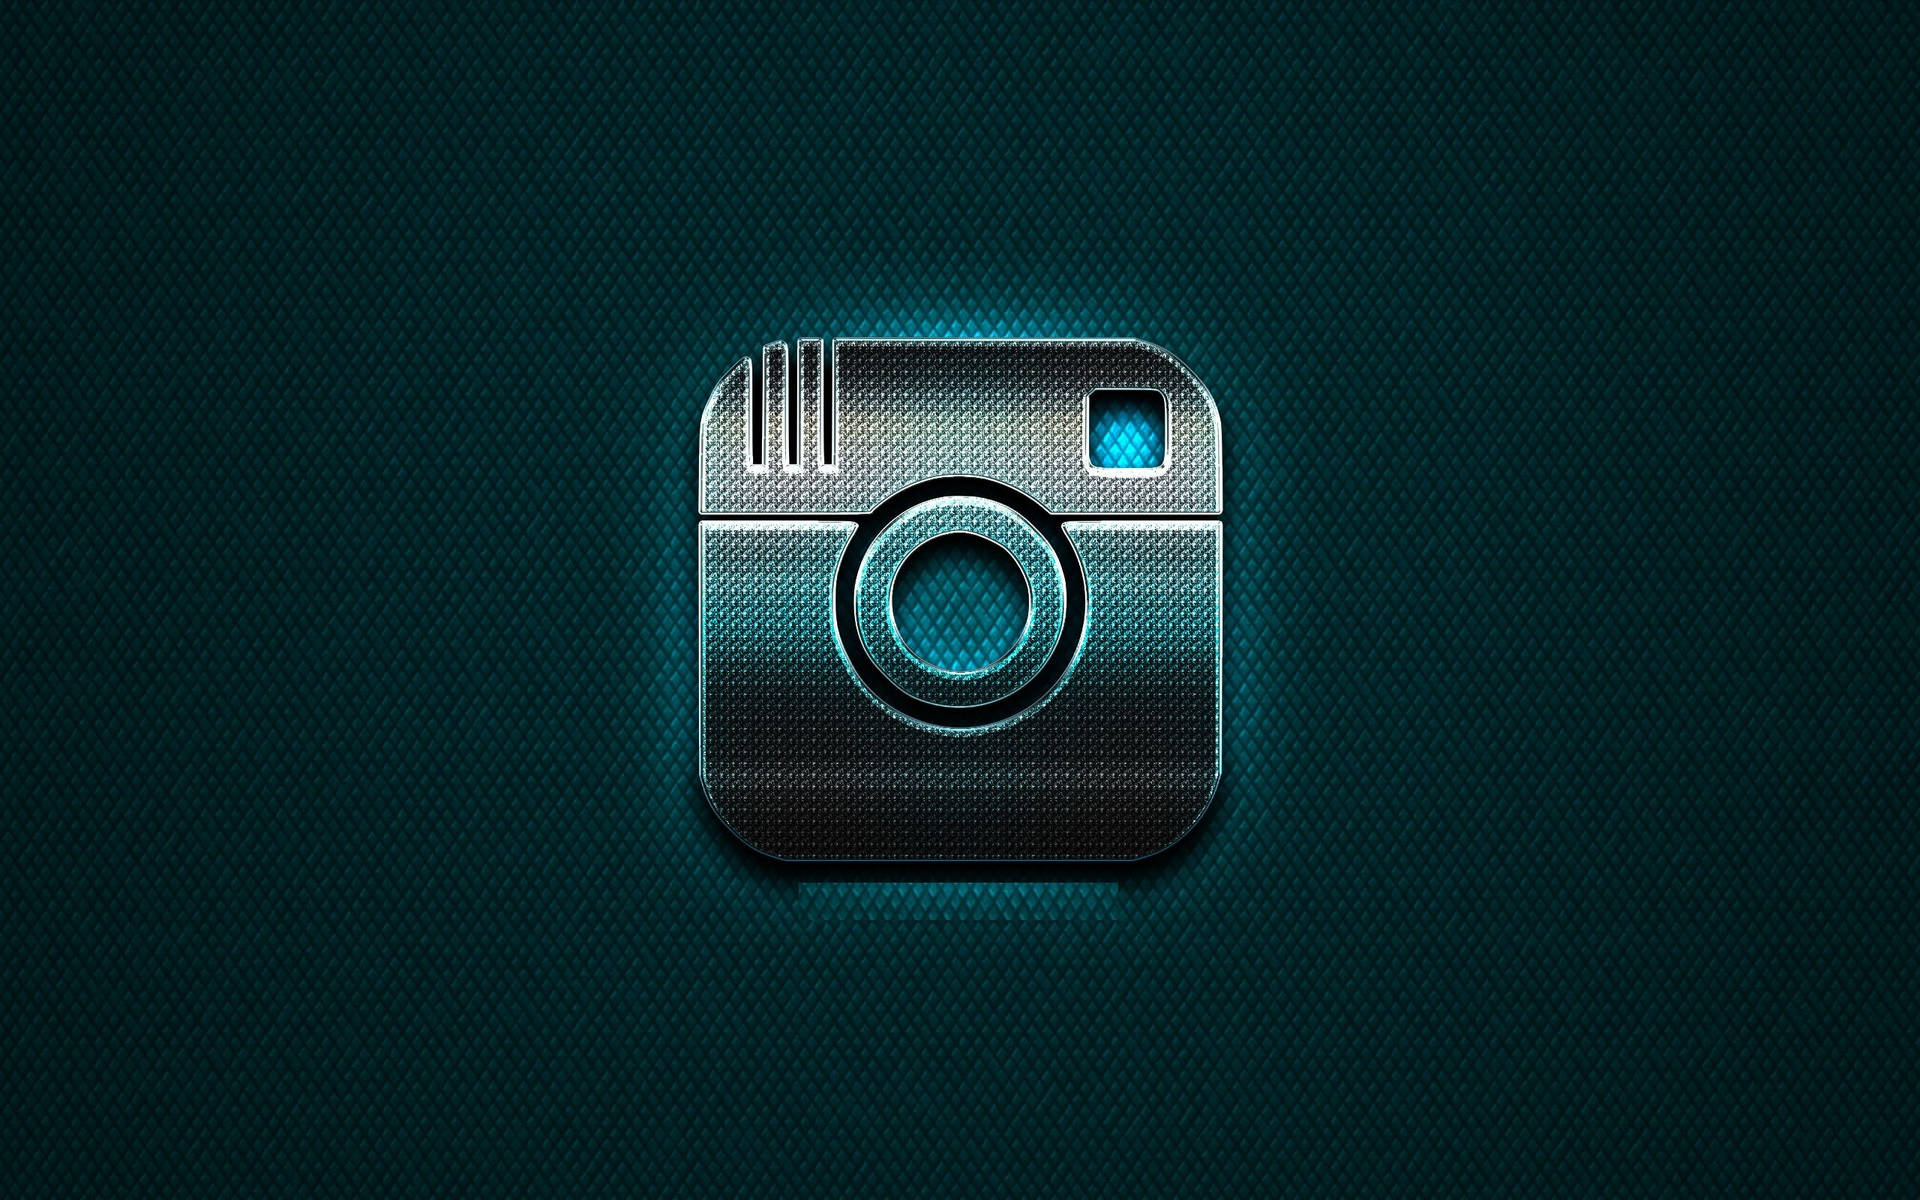 Neon Teal Instagram Logo Wallpaper